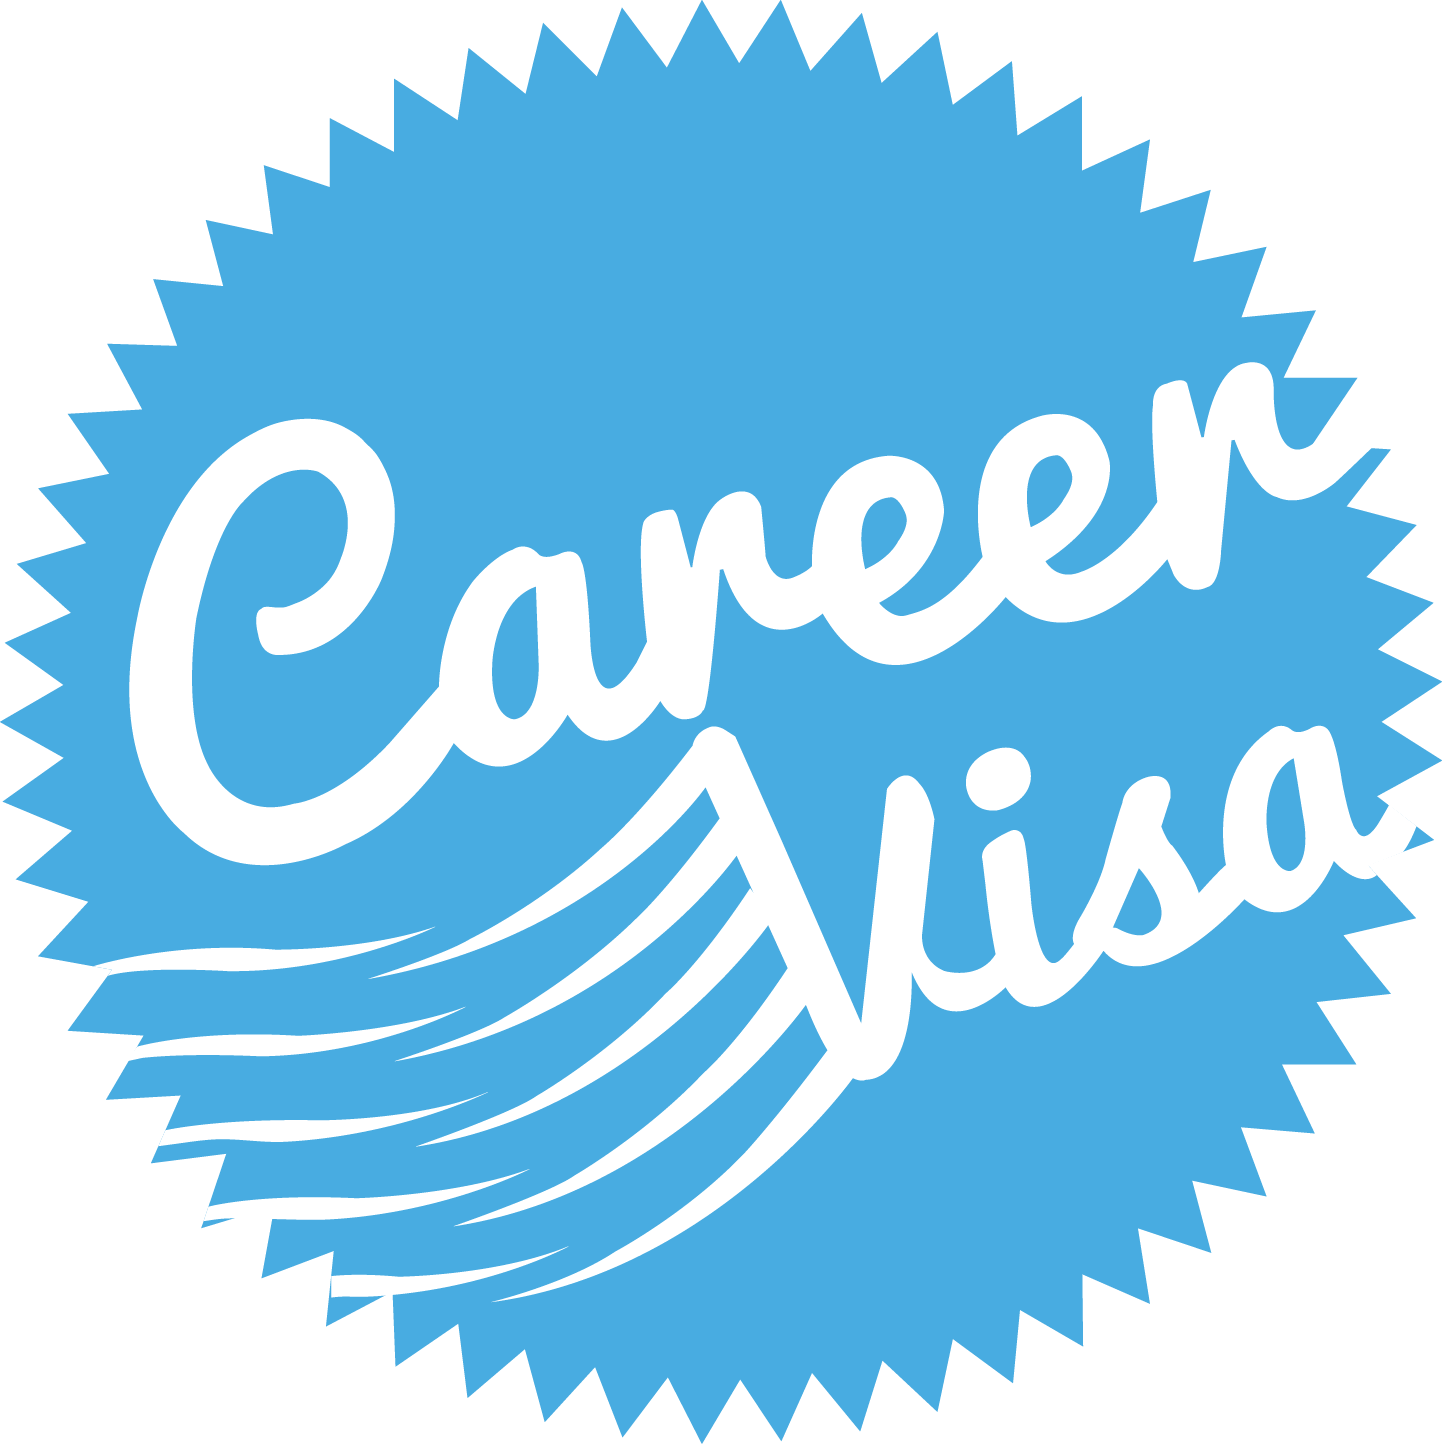 Career Visa